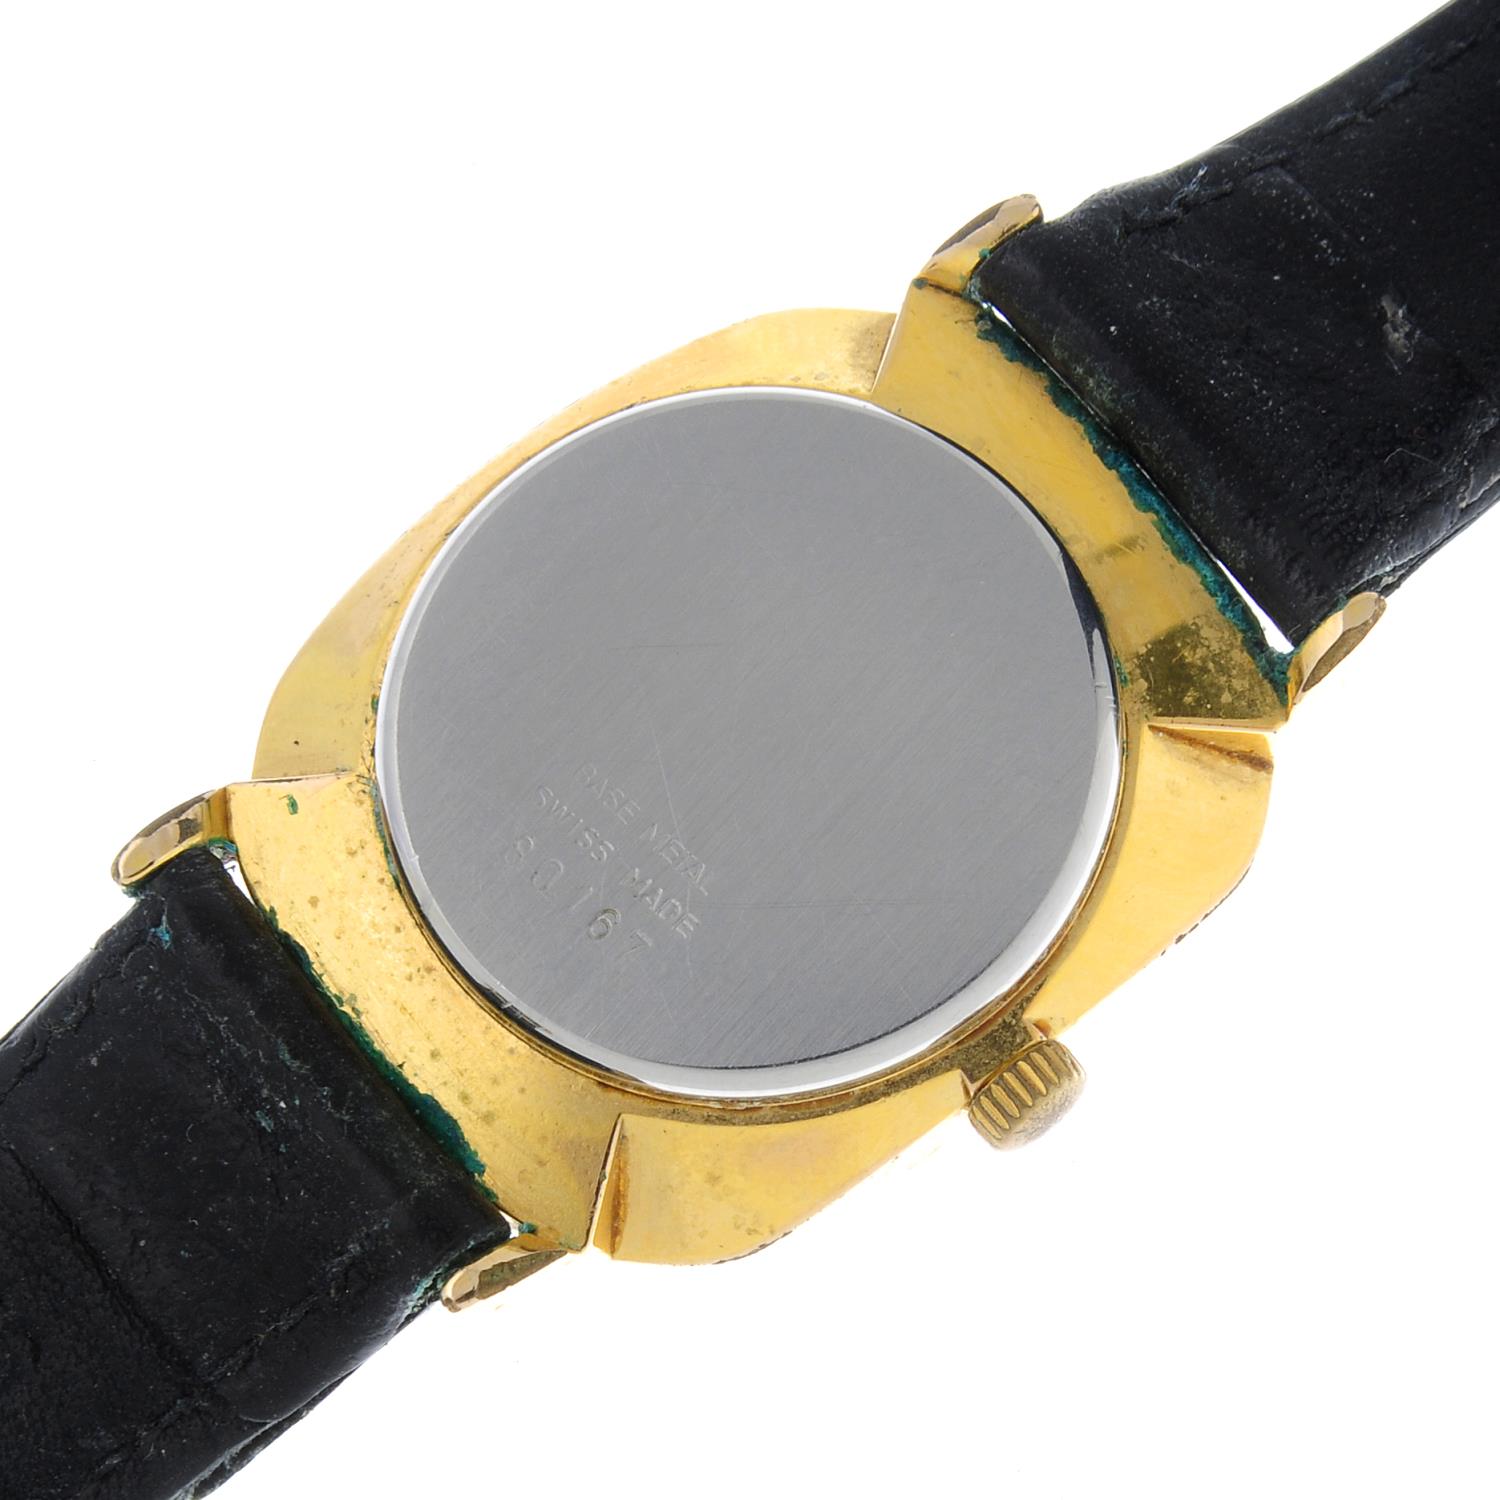 MAPPIN & WEBB - a gentleman's wrist watch. - Image 4 of 4